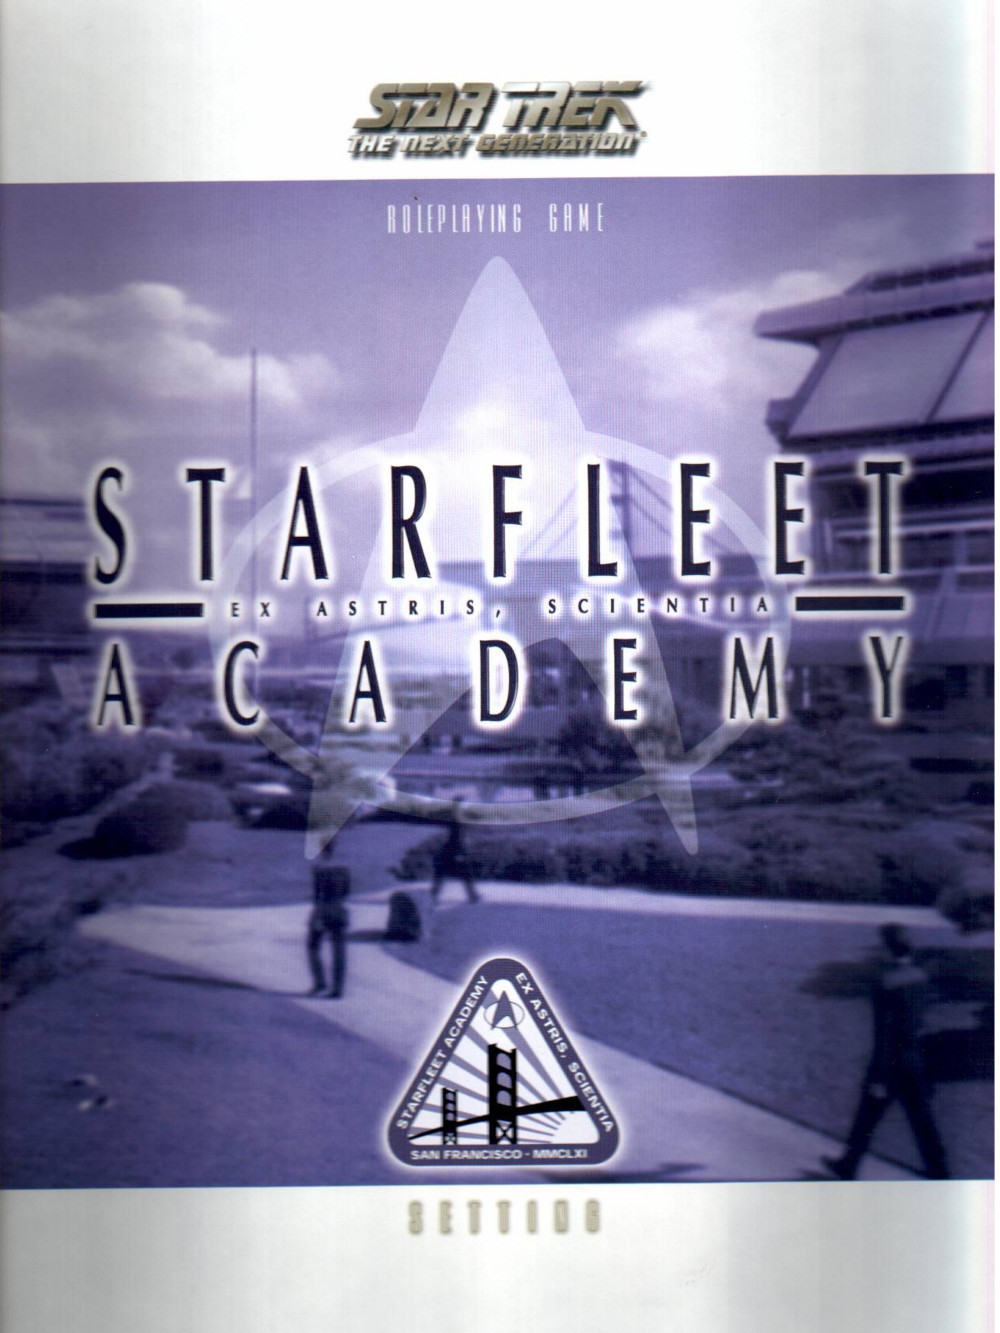 Starfleet Academy (Sep 1999)